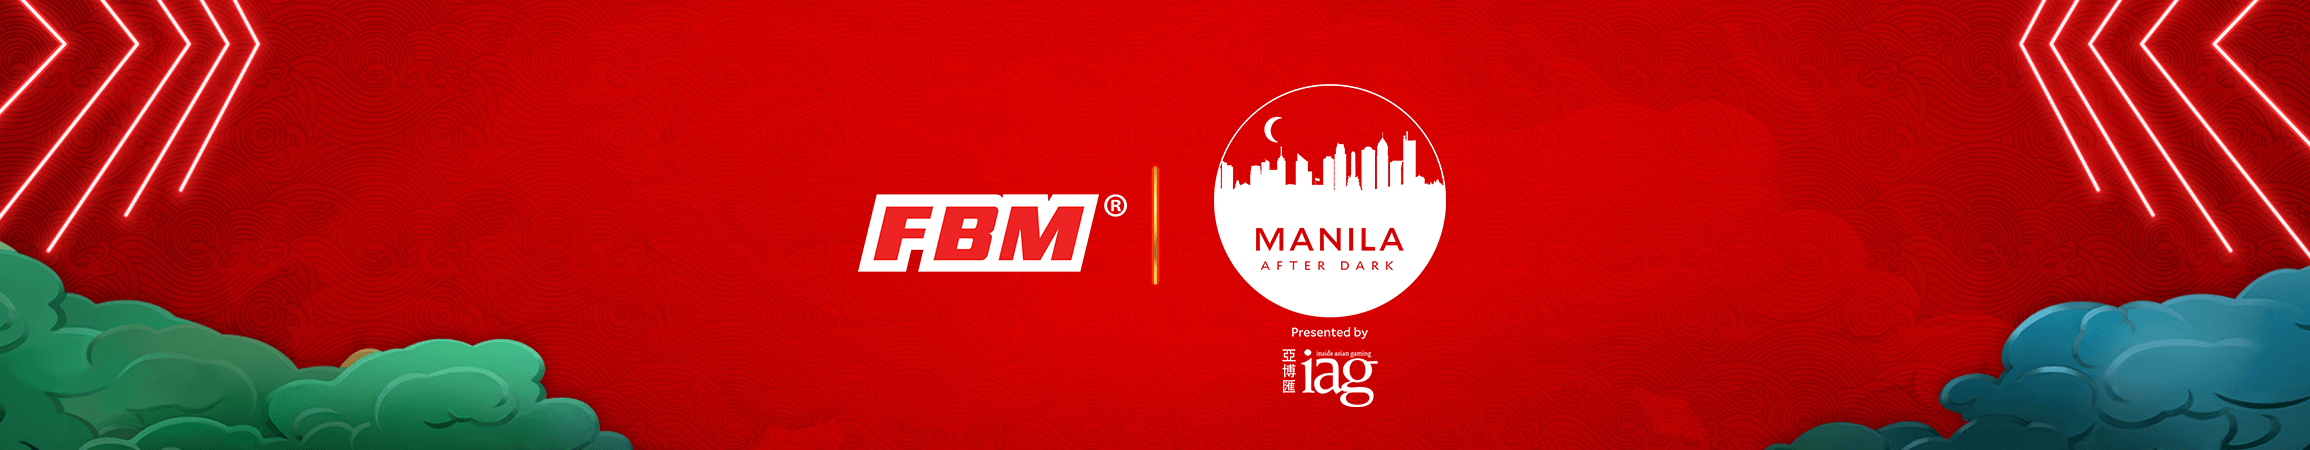 FBM® shines as Gold Sponsor at IAG Manila After Dark